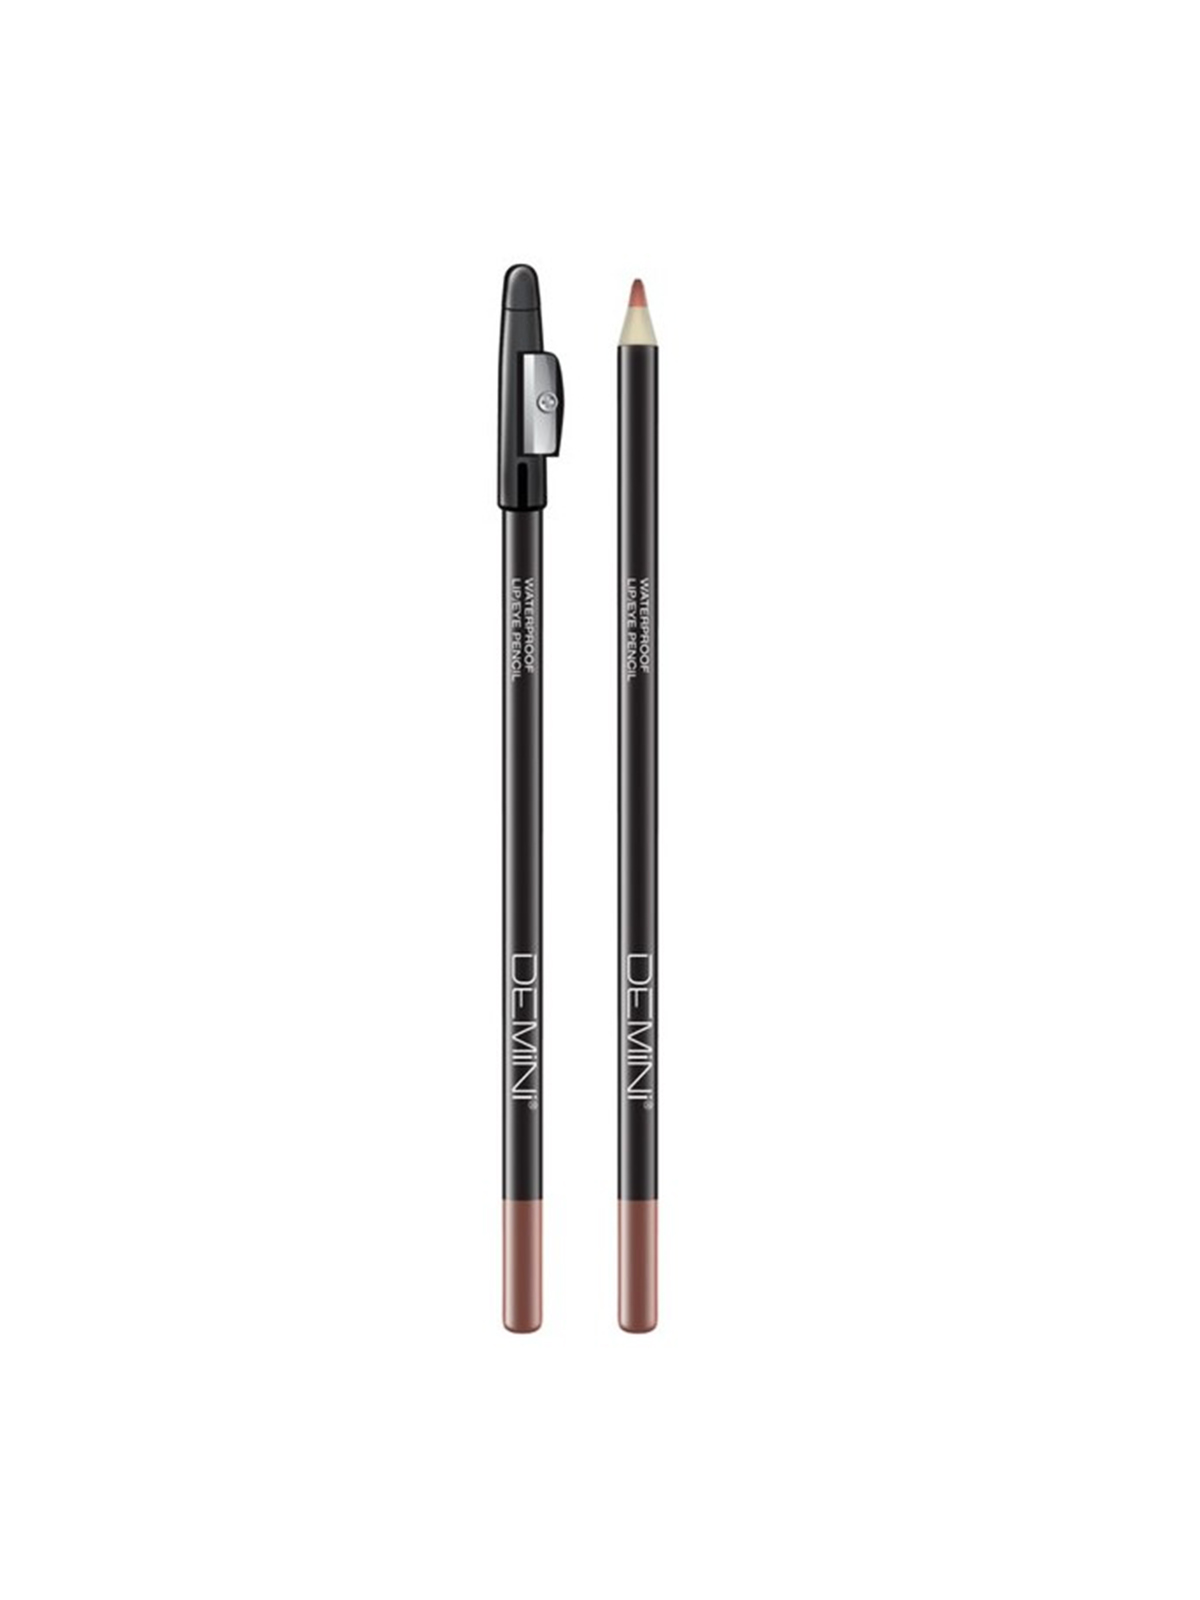 DeMiNi Карандаш косметический для губ/глаз водостойкий  - Waterproof Lip/Eye Pencil № 040  1,8 г